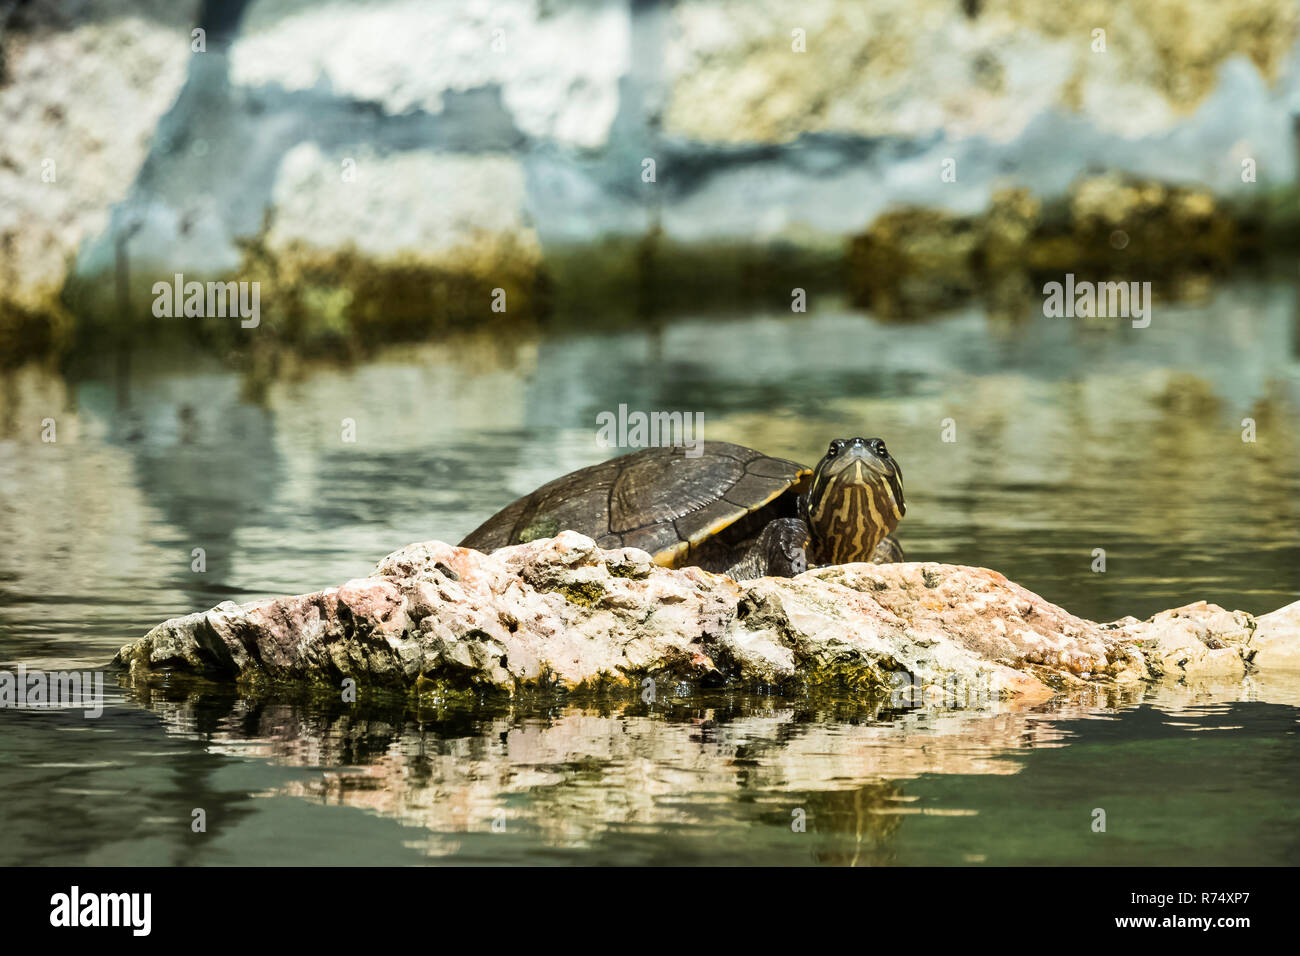 Kubanische Schieberegler (Trachemys decussata), Turtle native auf Kuba - Peninsula de Zapata Nationalpark/Zapata Sumpf, Kuba Stockfoto